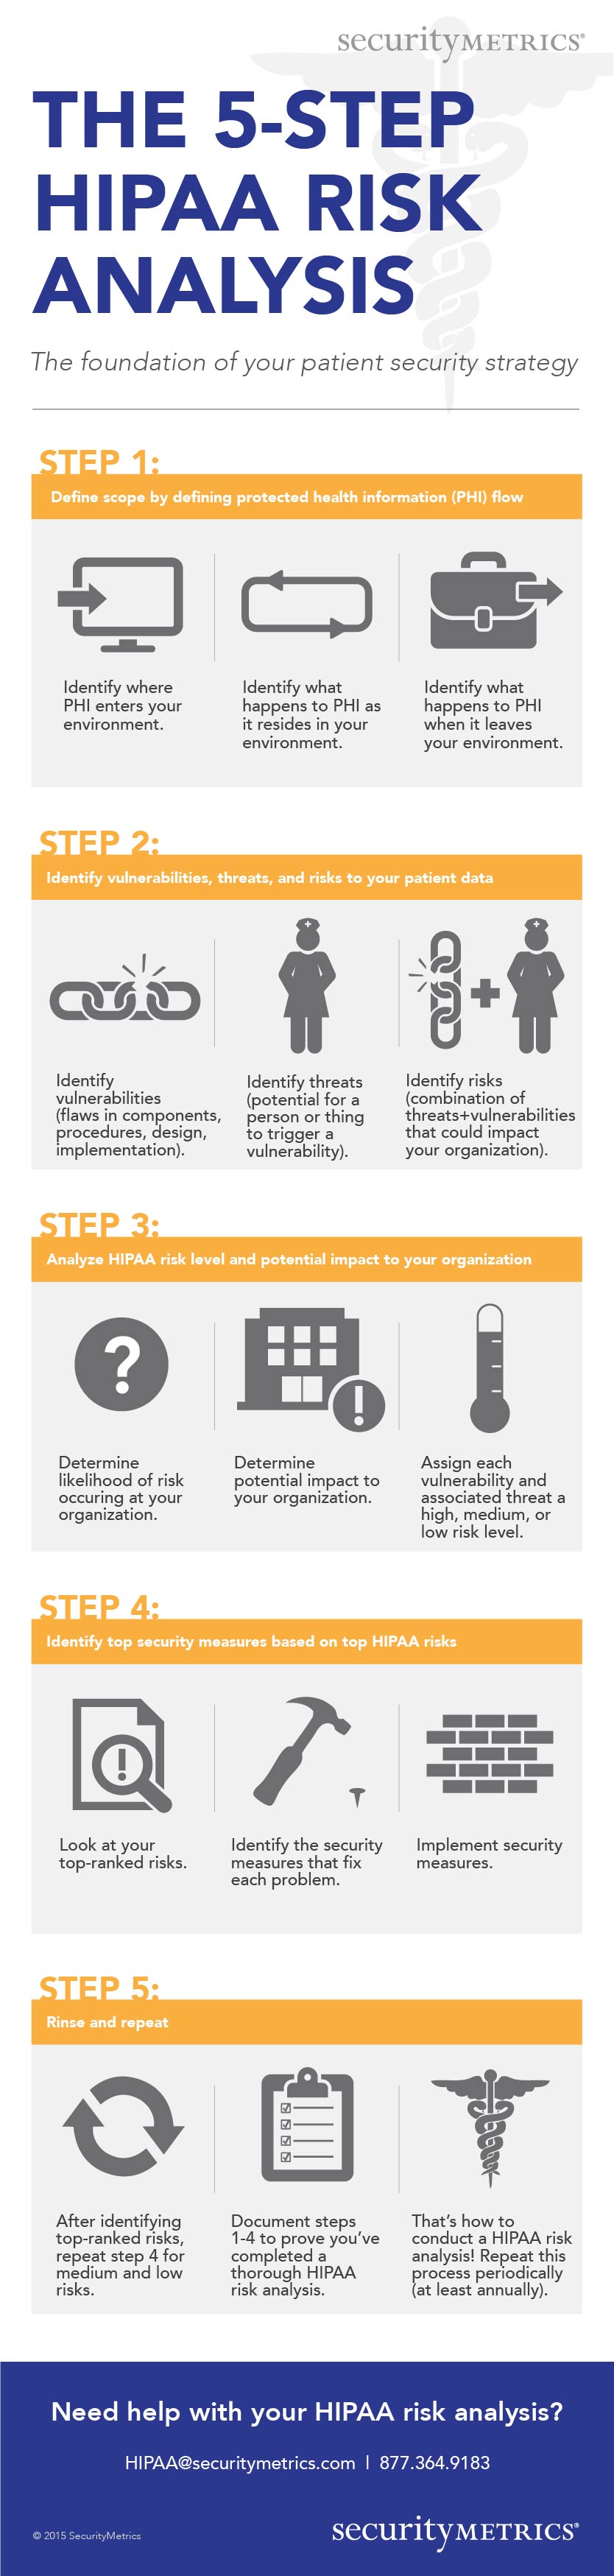 5 Step HIPAA Risk Analysis Checklist